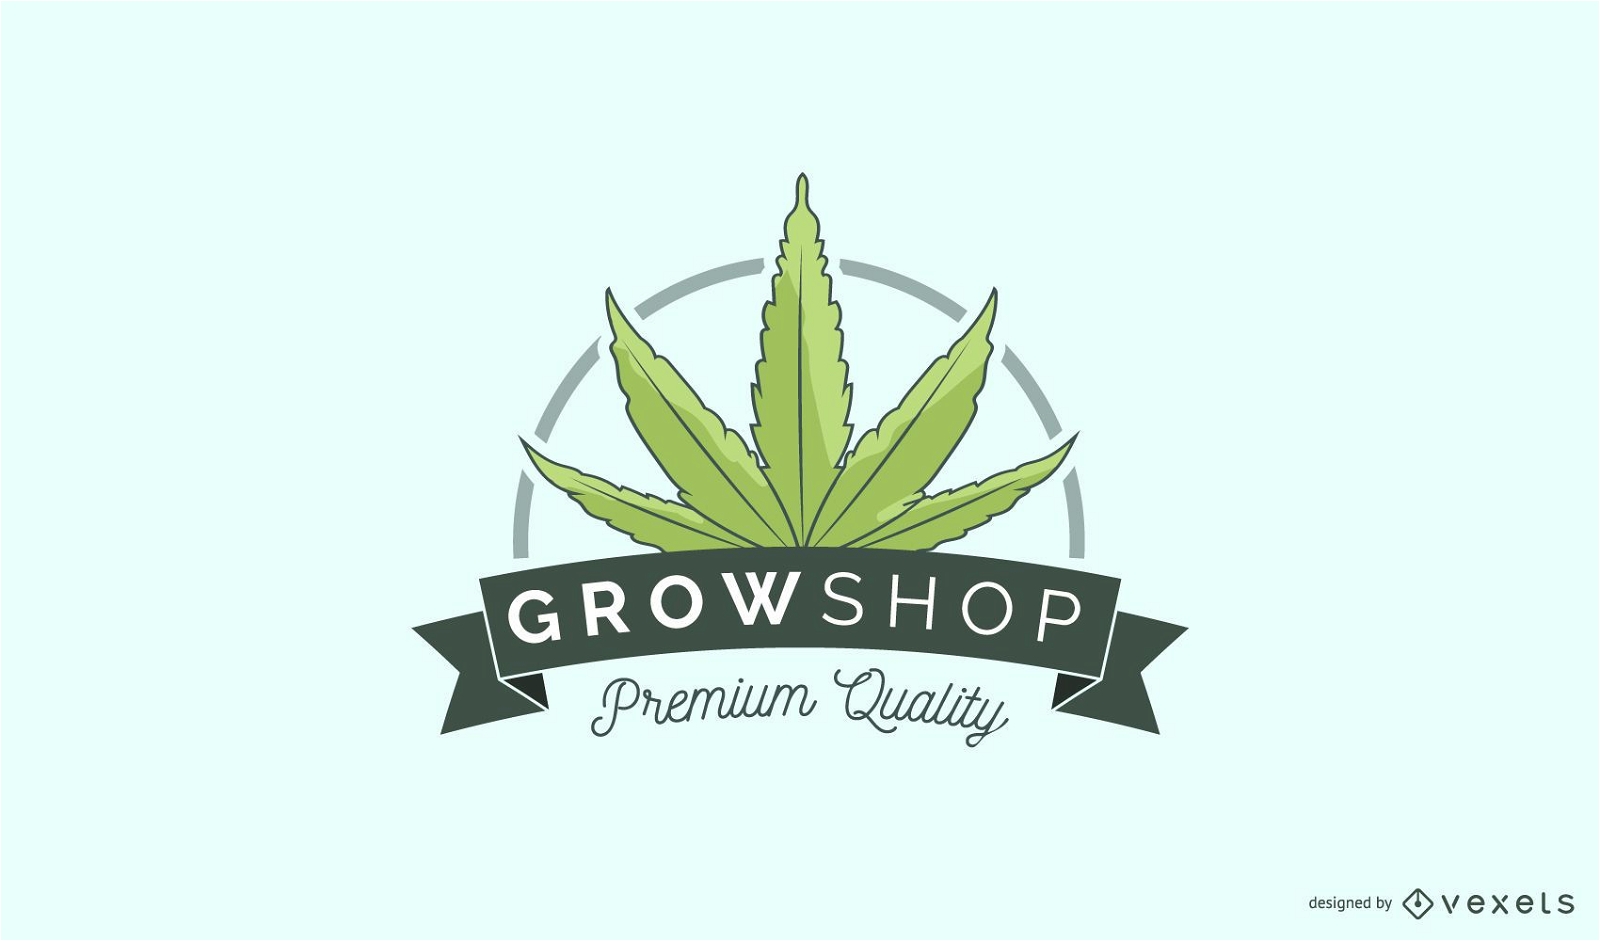 Growshop Custom Logo Design